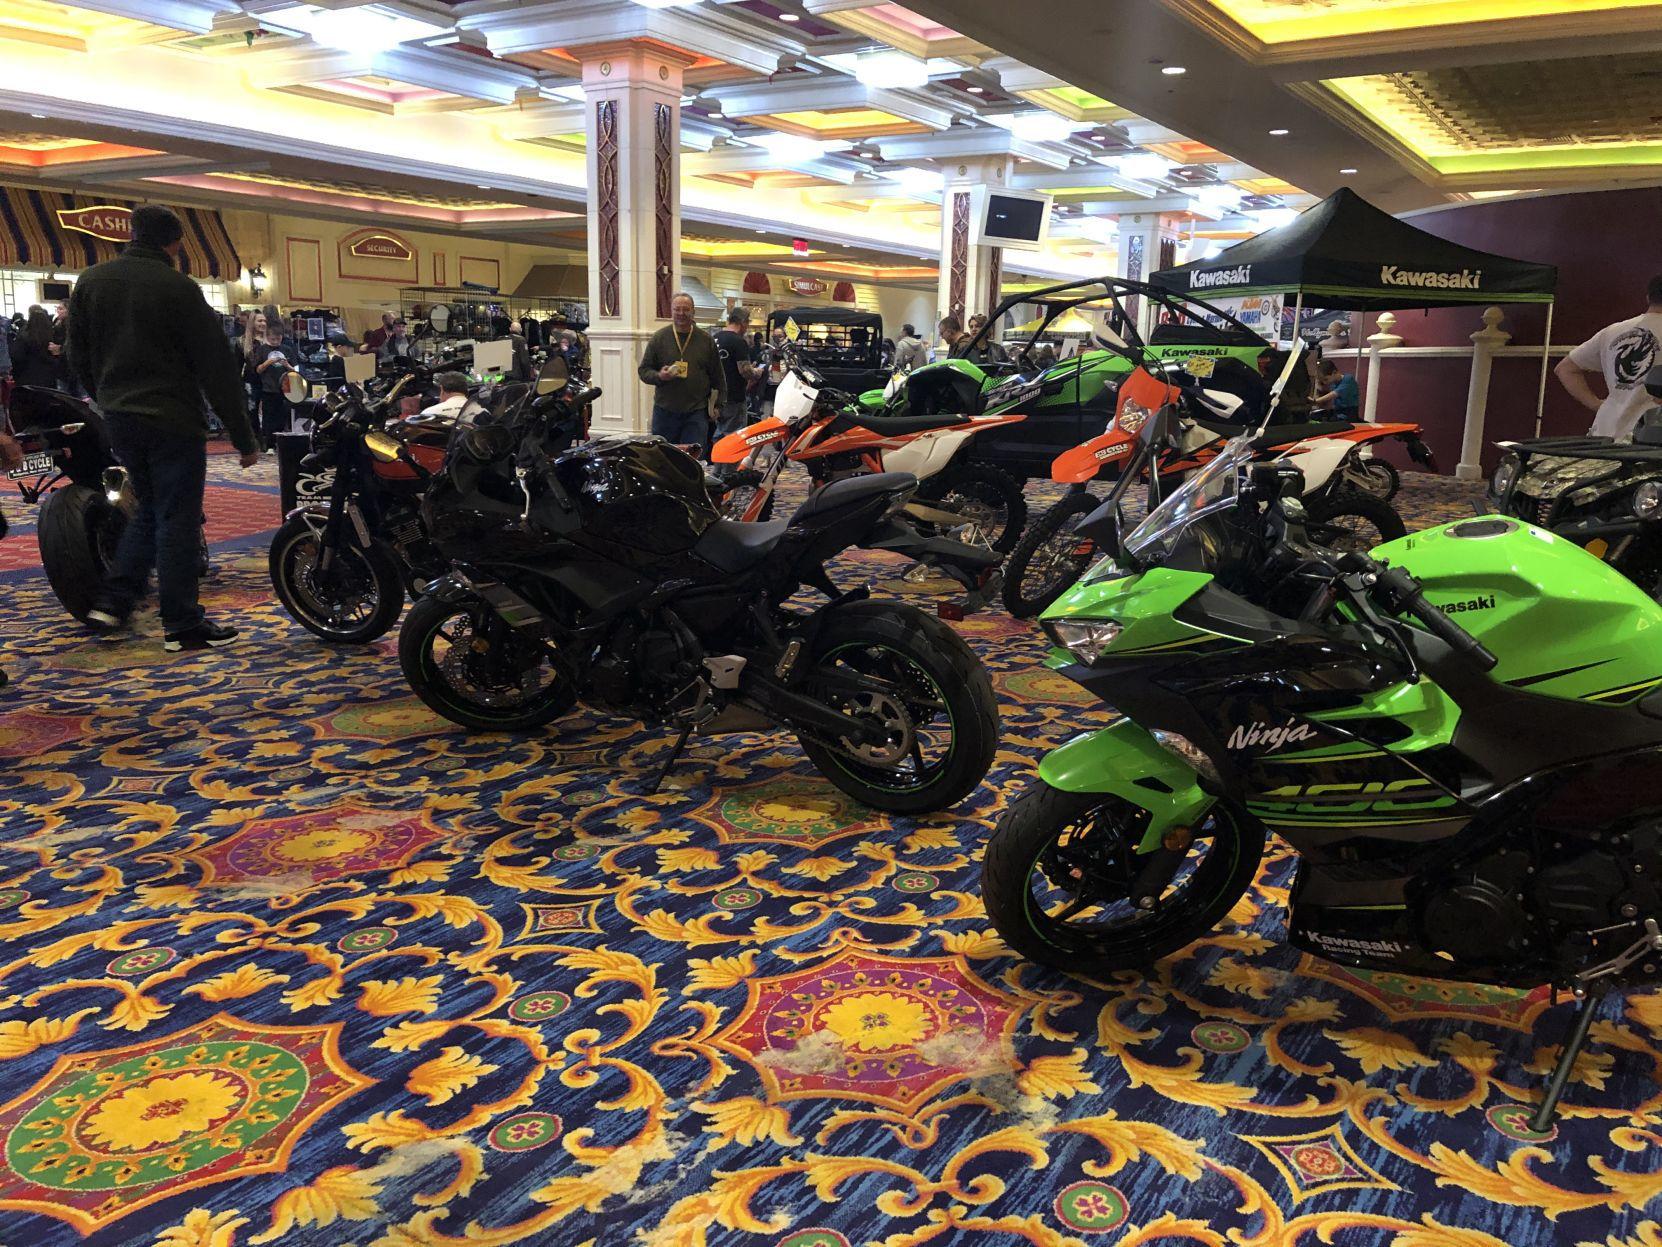 GALLERY International Motorcycle Show at Showboat Atlantic City